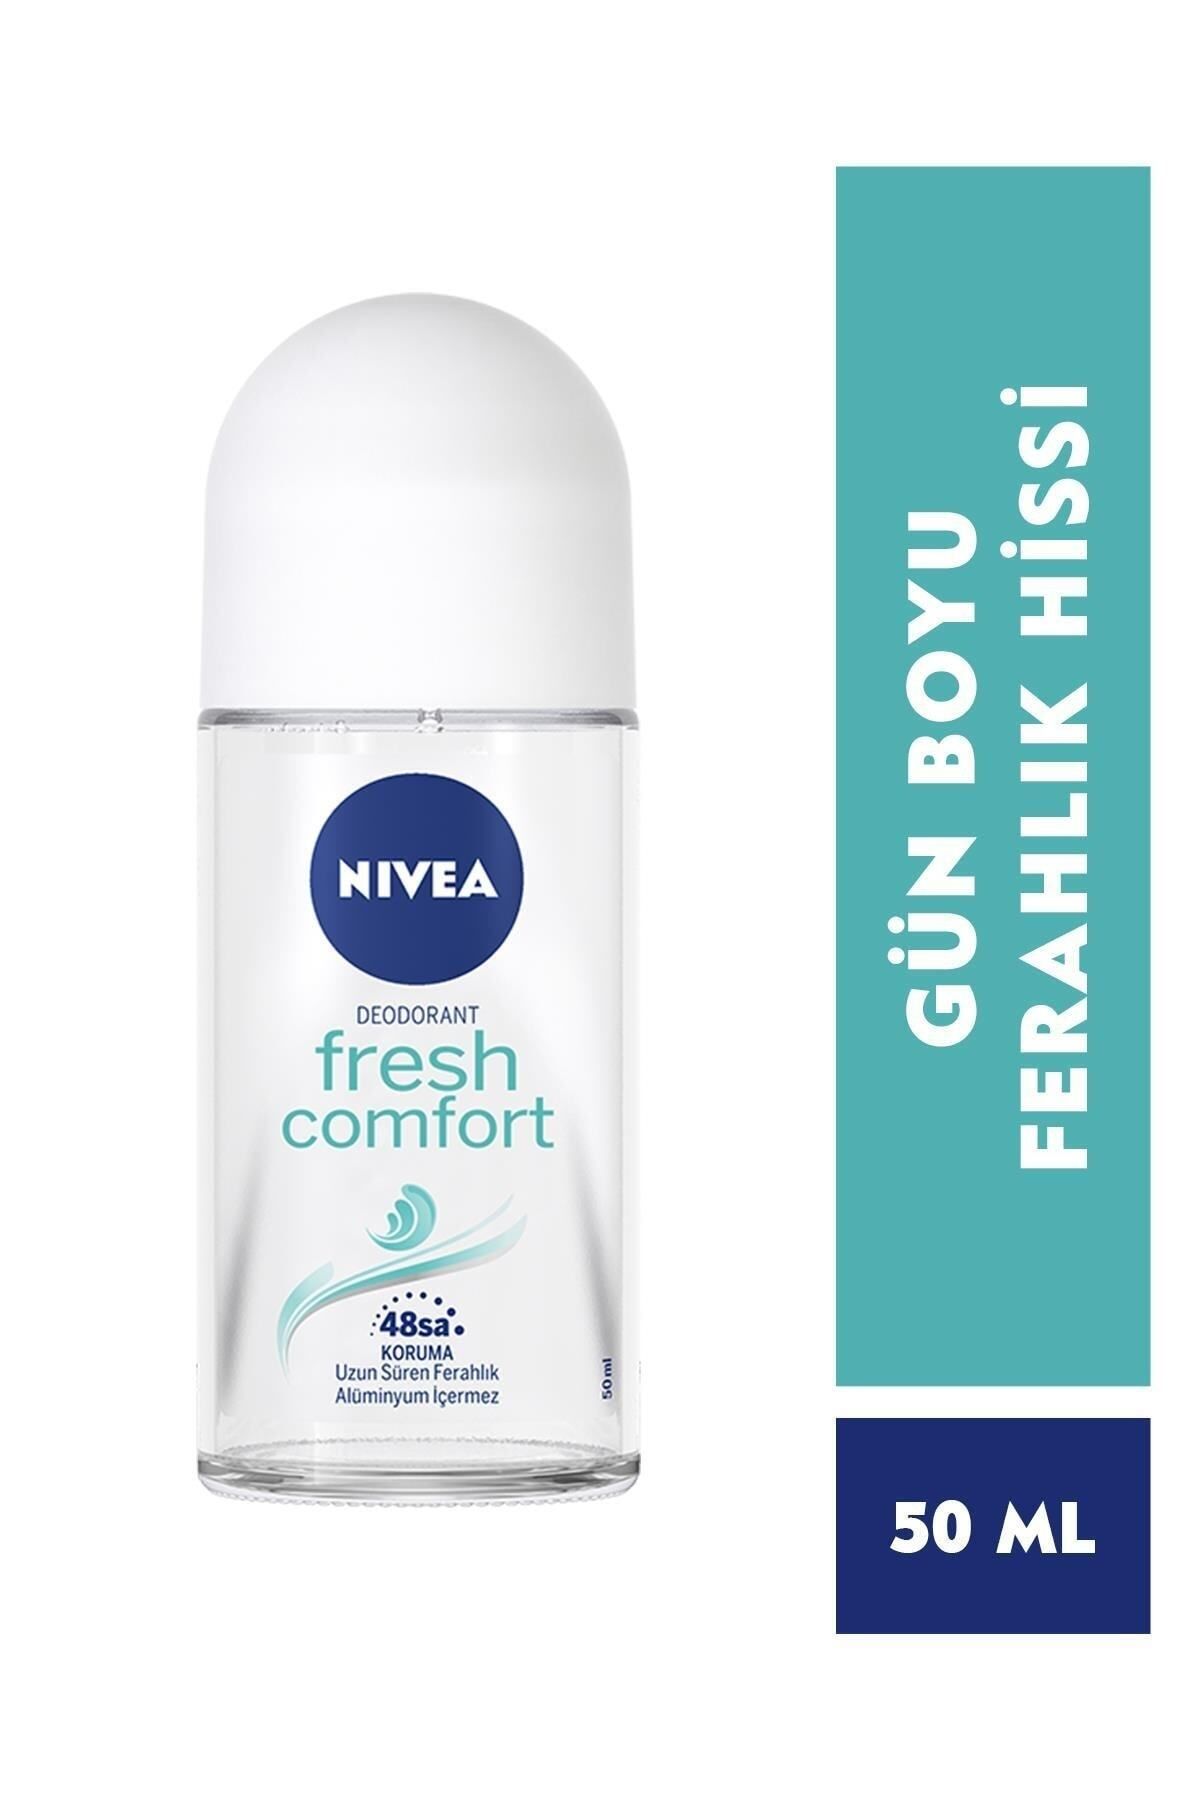 NIVEA Kadın Roll On Deodorant Fresh Comfort 50ml,48 Saat Deodorant Koruması